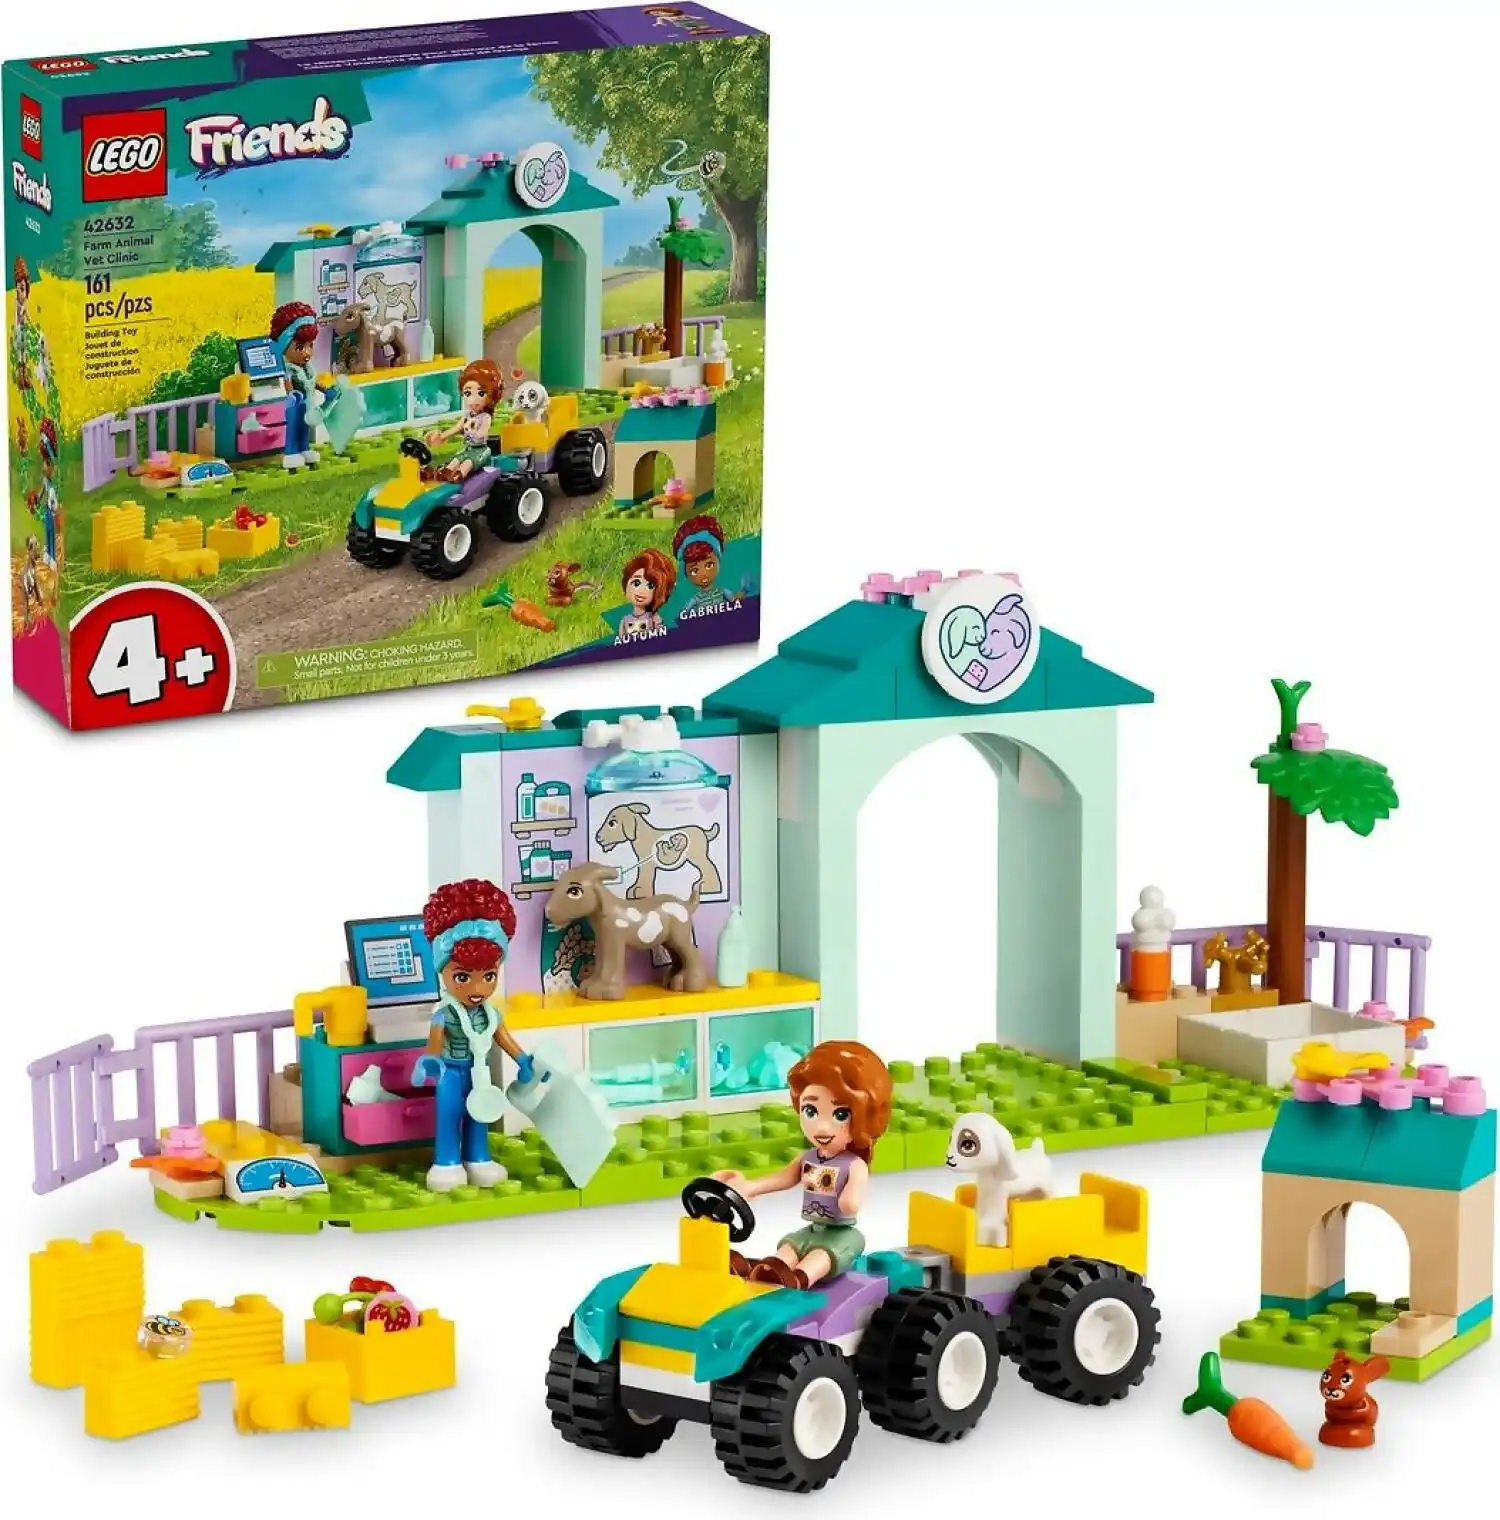 LEGO 42632 Farm Animal Vet Clinic - Friends 4+